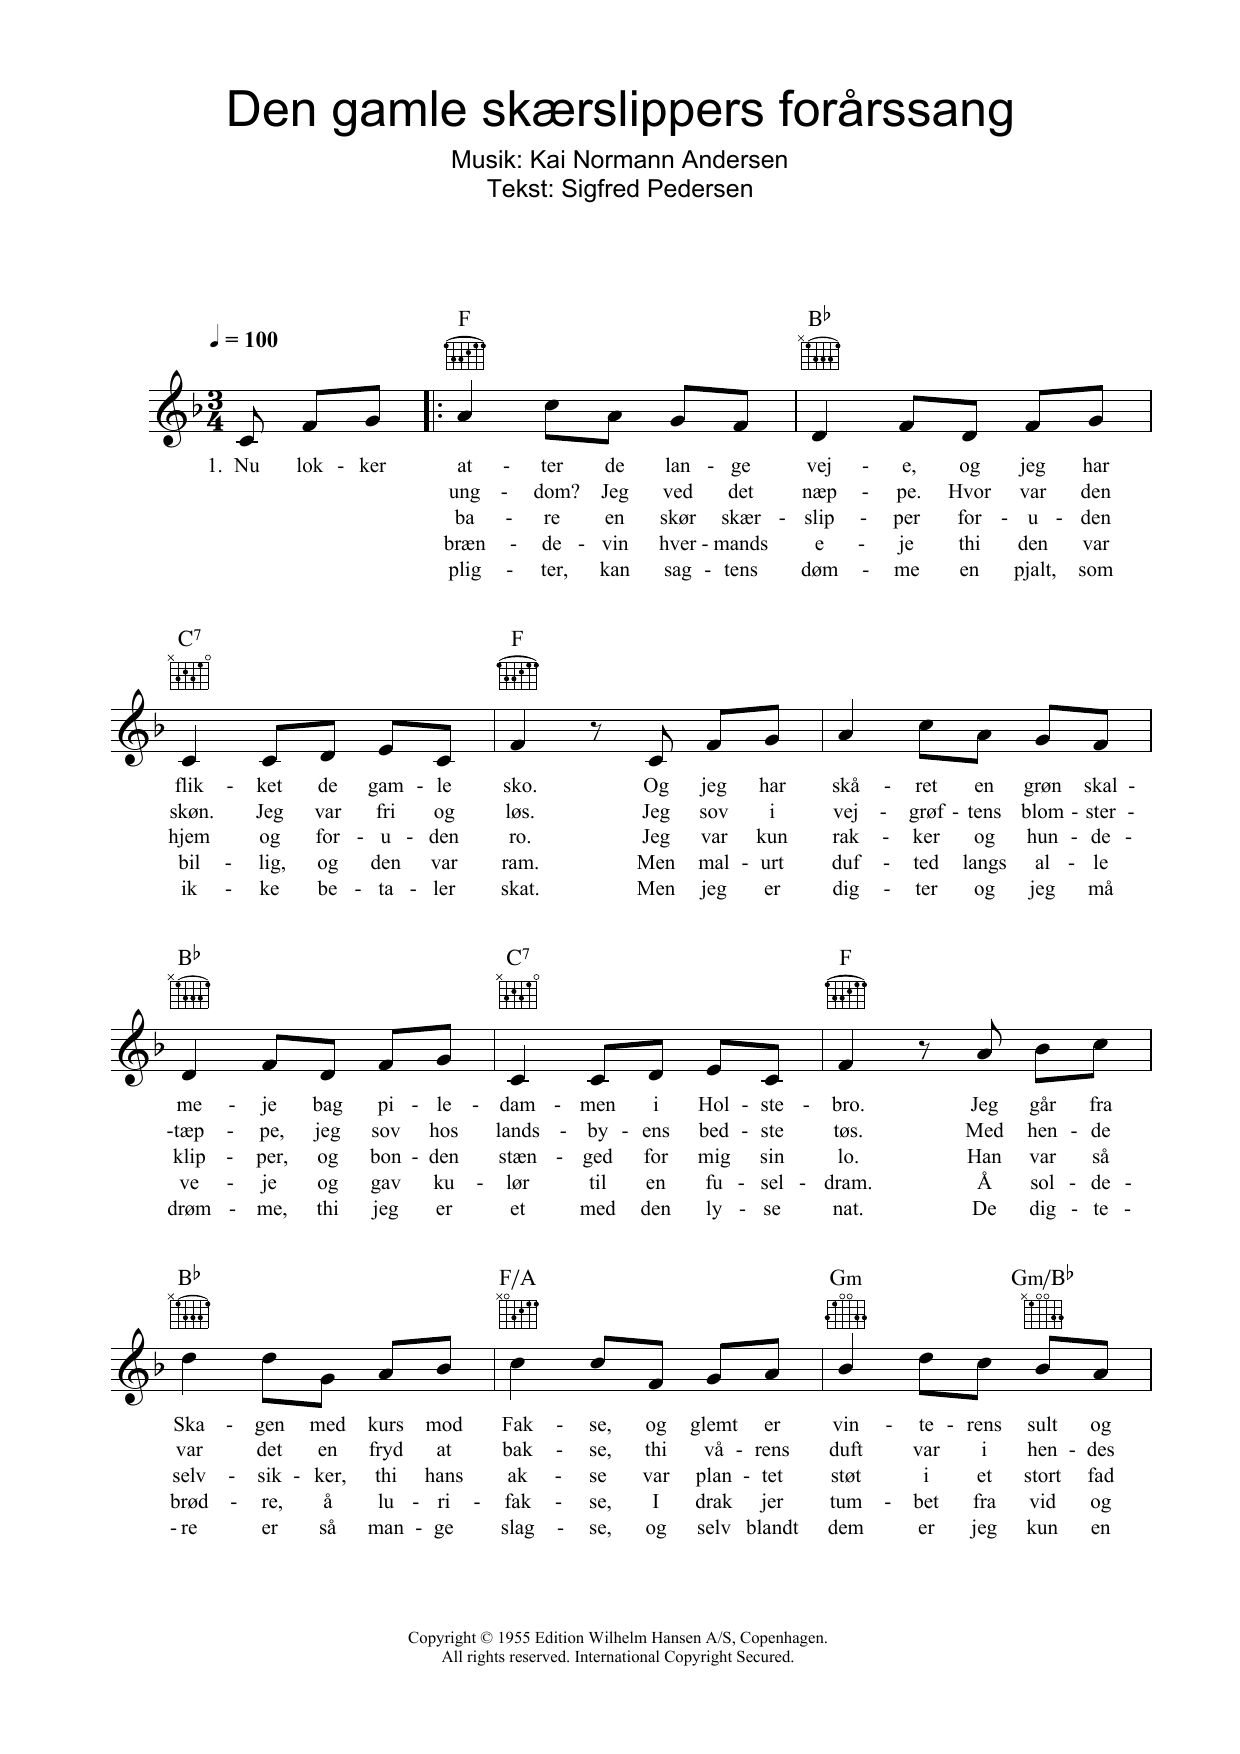 Kai Normann Andersen Den Gamle Skaerslippers Fararssang Sheet Music Notes & Chords for Melody Line, Lyrics & Chords - Download or Print PDF